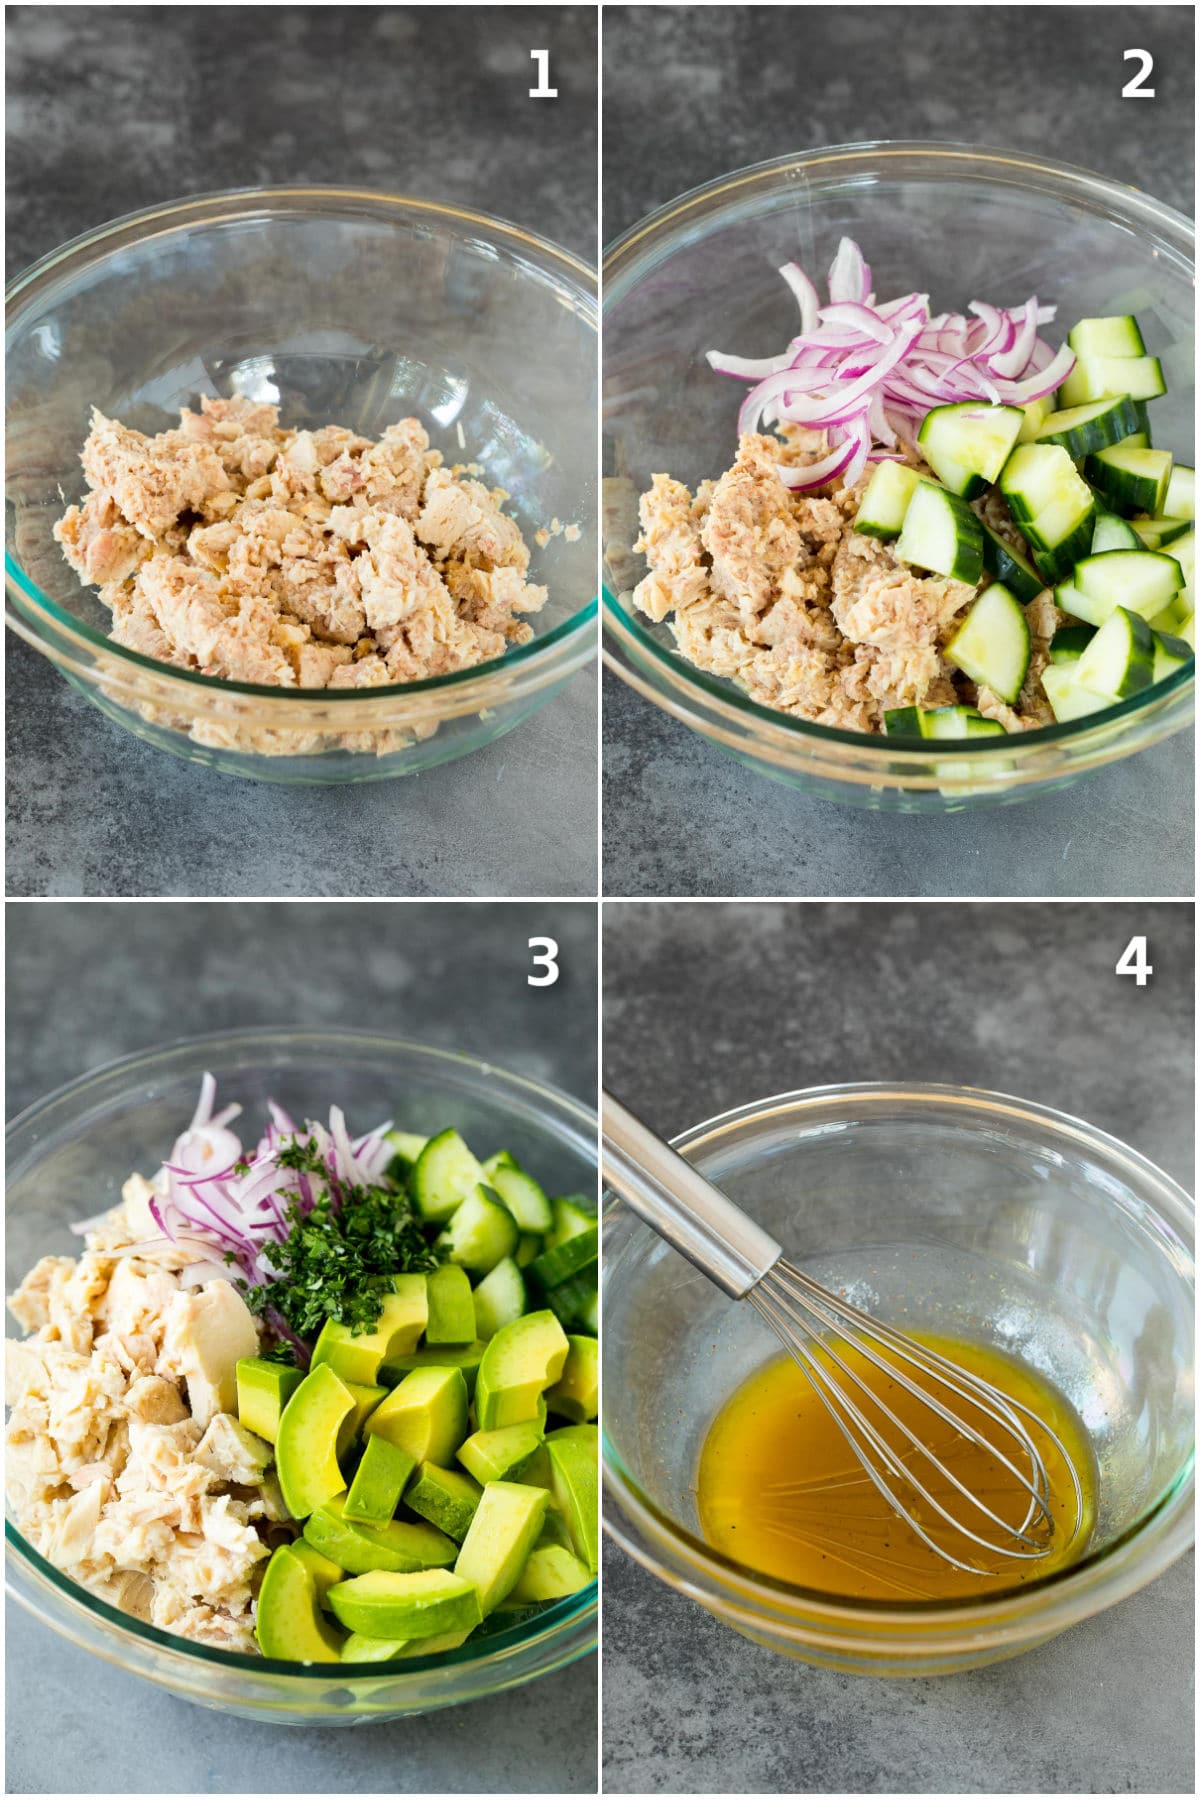 Process shots showing how to make avocado tuna salad.